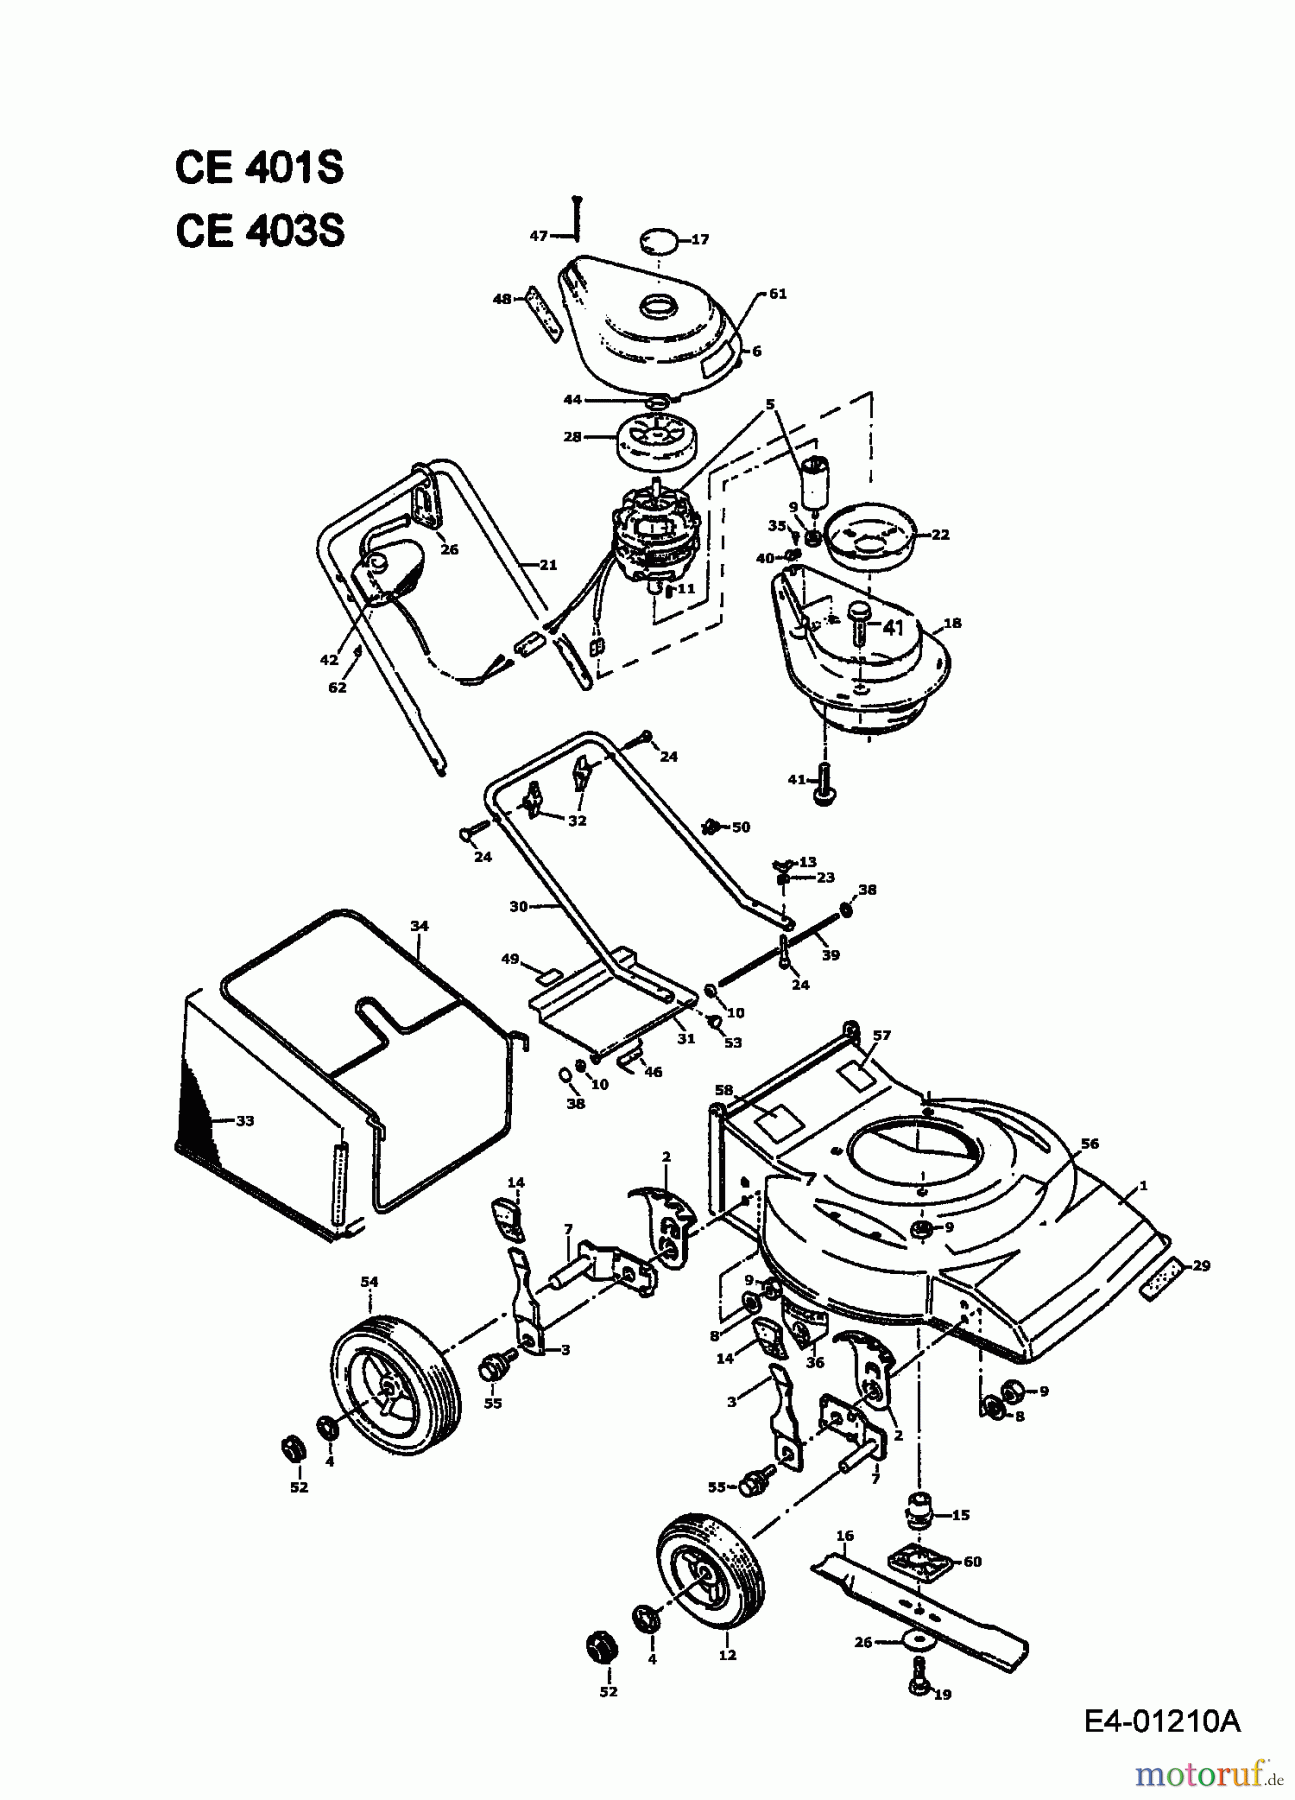  MTD Electric mower CE 401 S 901E403S001  (1994) Basic machine